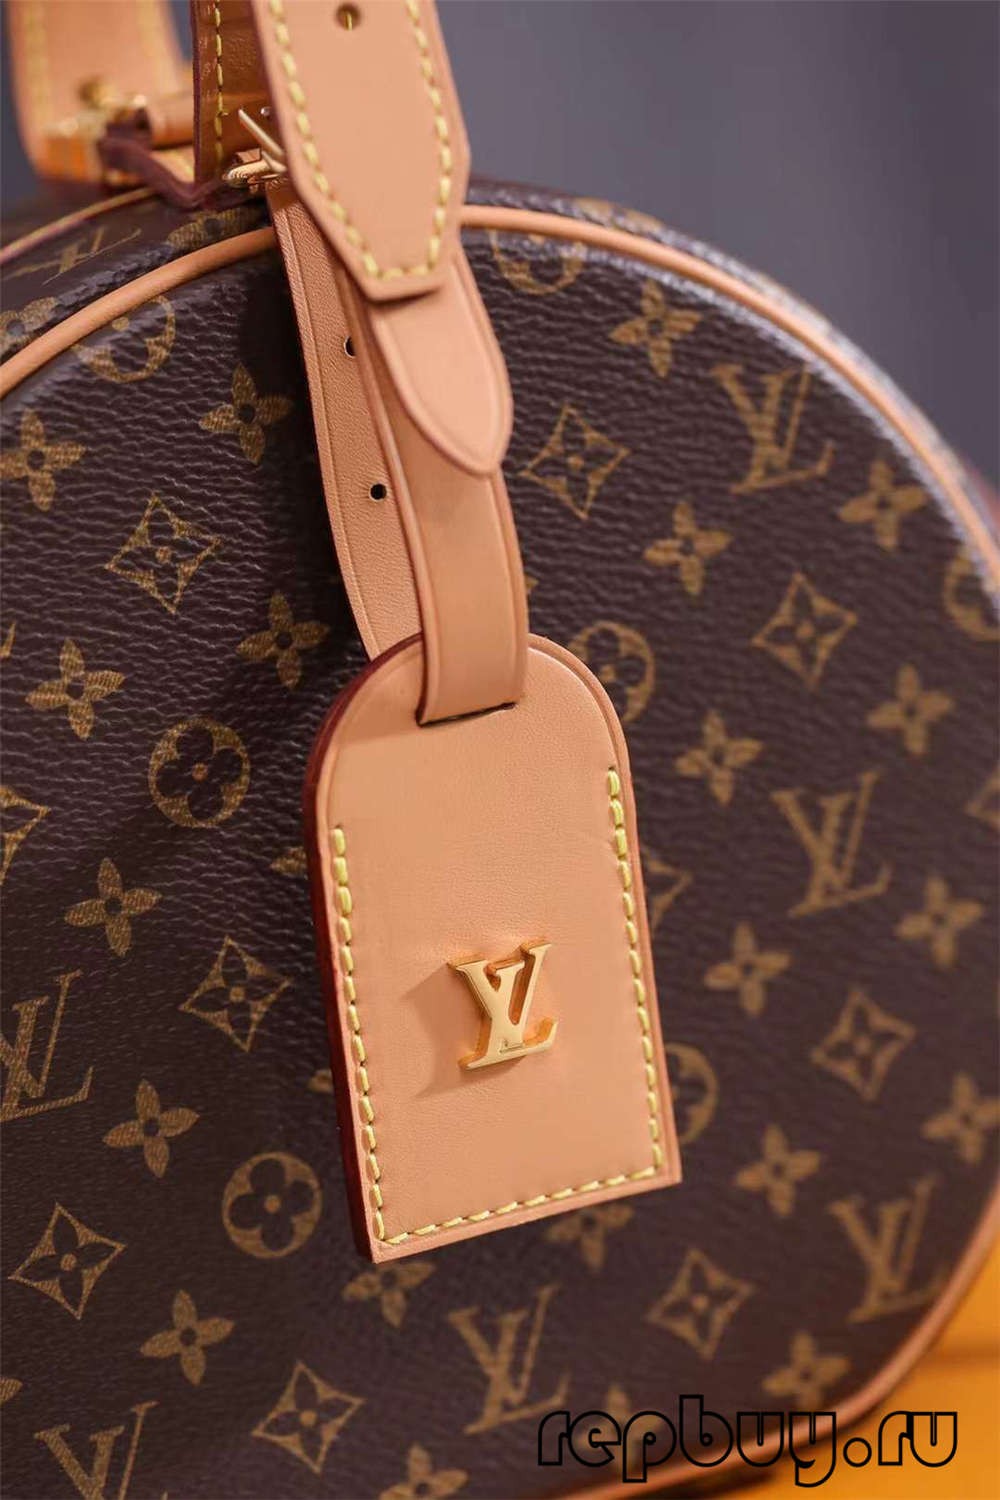 Louis Vuitton M43514 PETITE BOITE CHAPEAU 17.5cm sa itaas na mga replica na bag Mga detalye ng hardware at craft (2022 Edition)-Best Quality Fake Louis Vuitton Bag Online Store, Replica designer bag ru